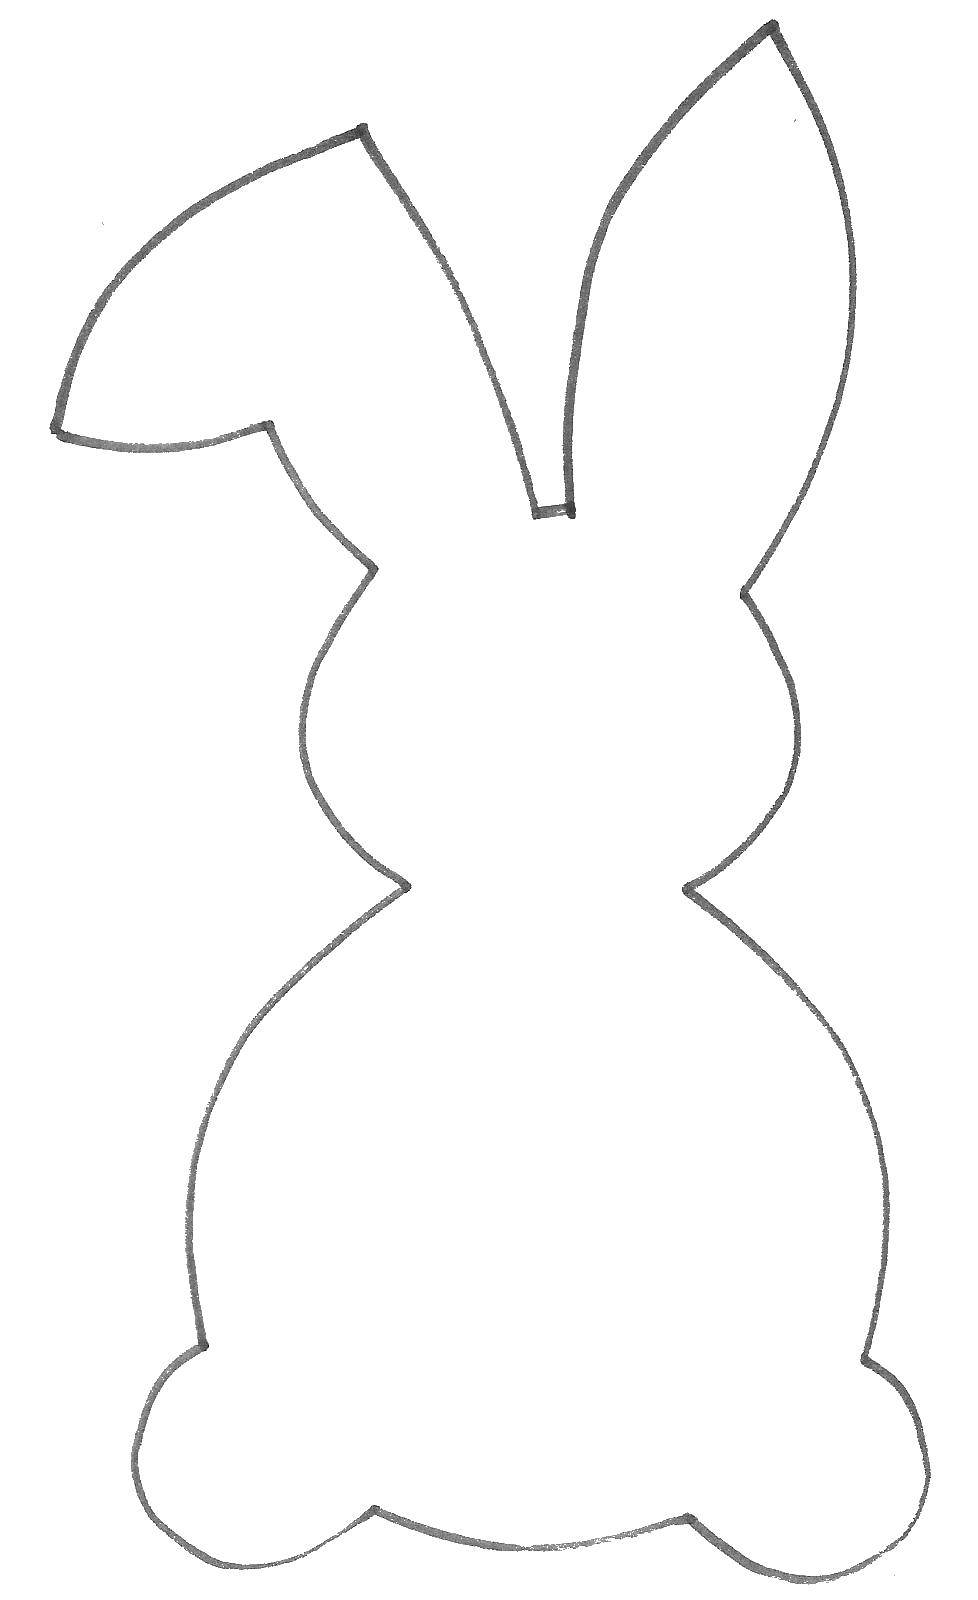 Название: Раскраска Контур зайца. Категория: Контур зайца для вырезания. Теги: контур, заяц, уши.